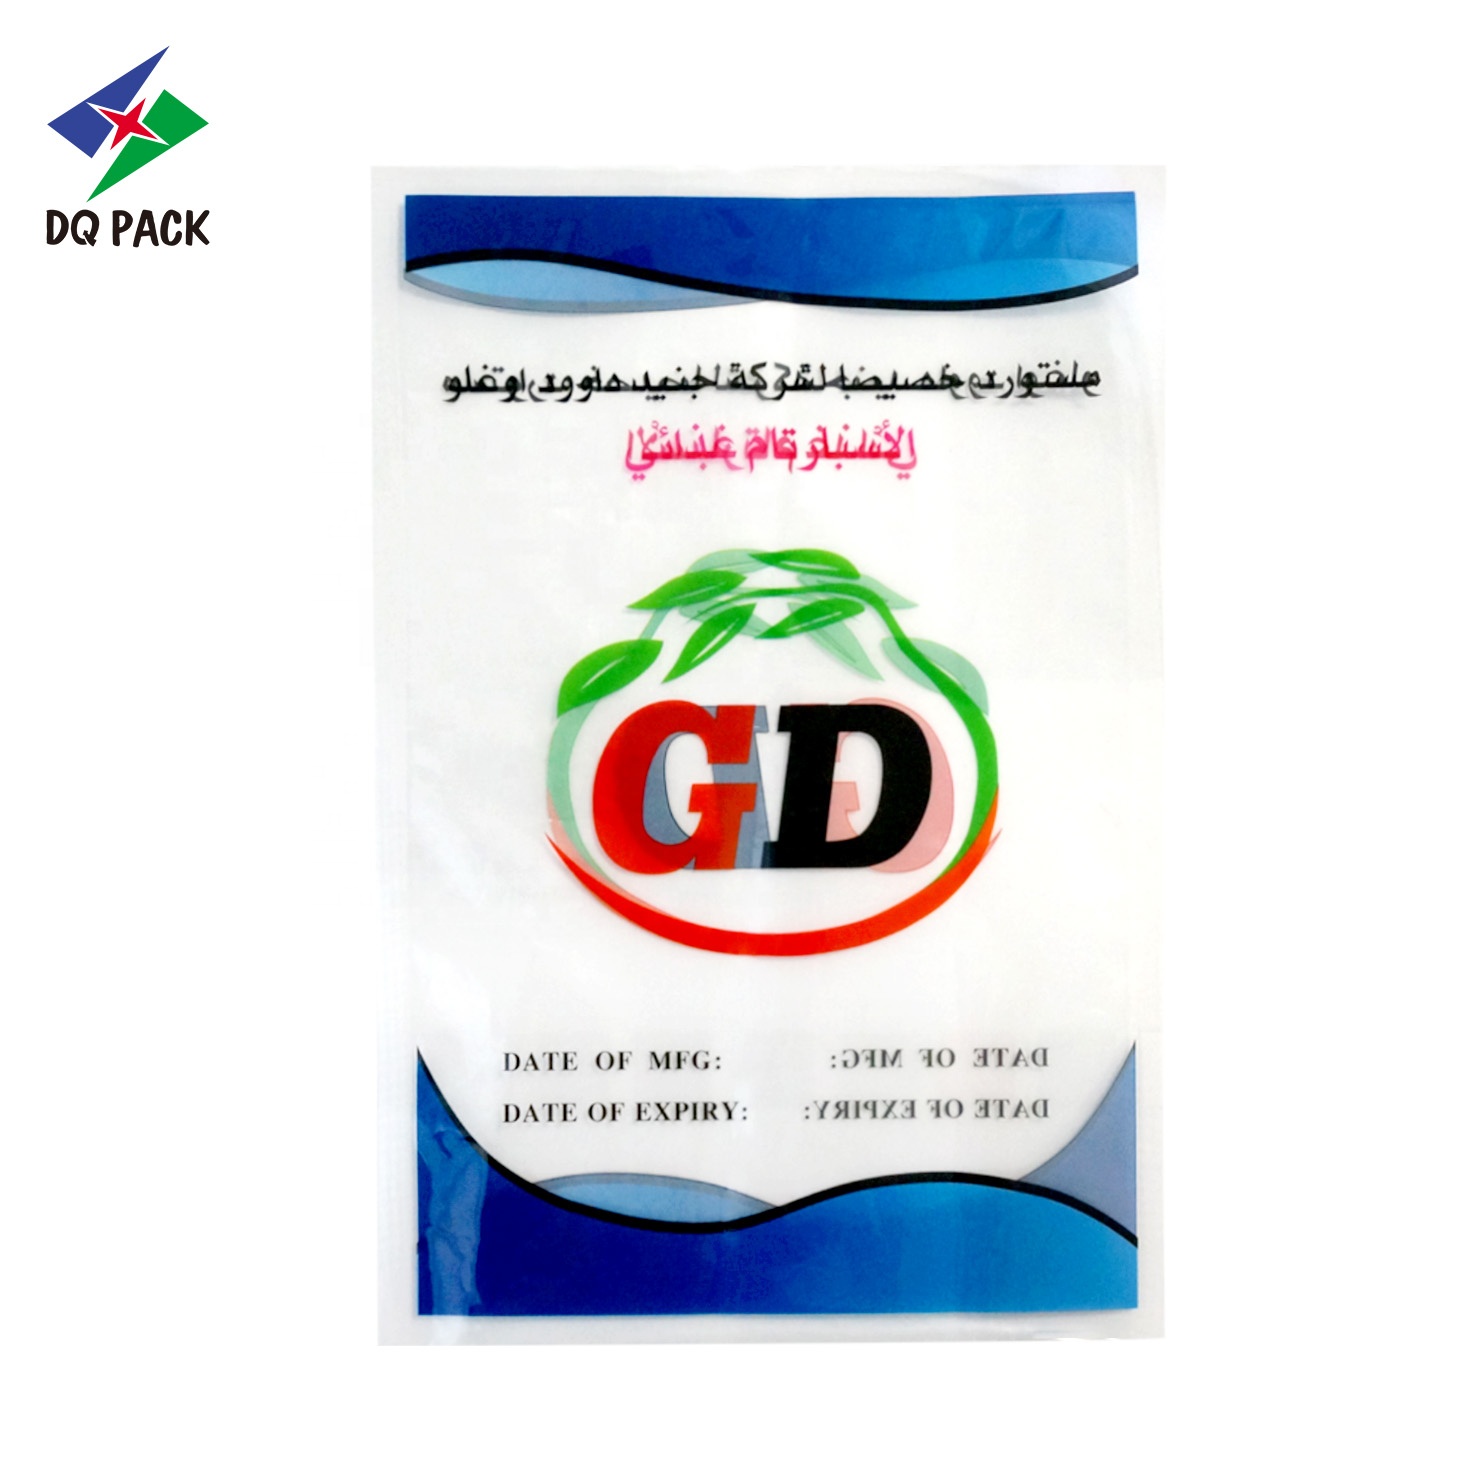 DQ PACK Custom Printed Food Plastic Packagiung Bag Clean powder 3 Side Seal Bag